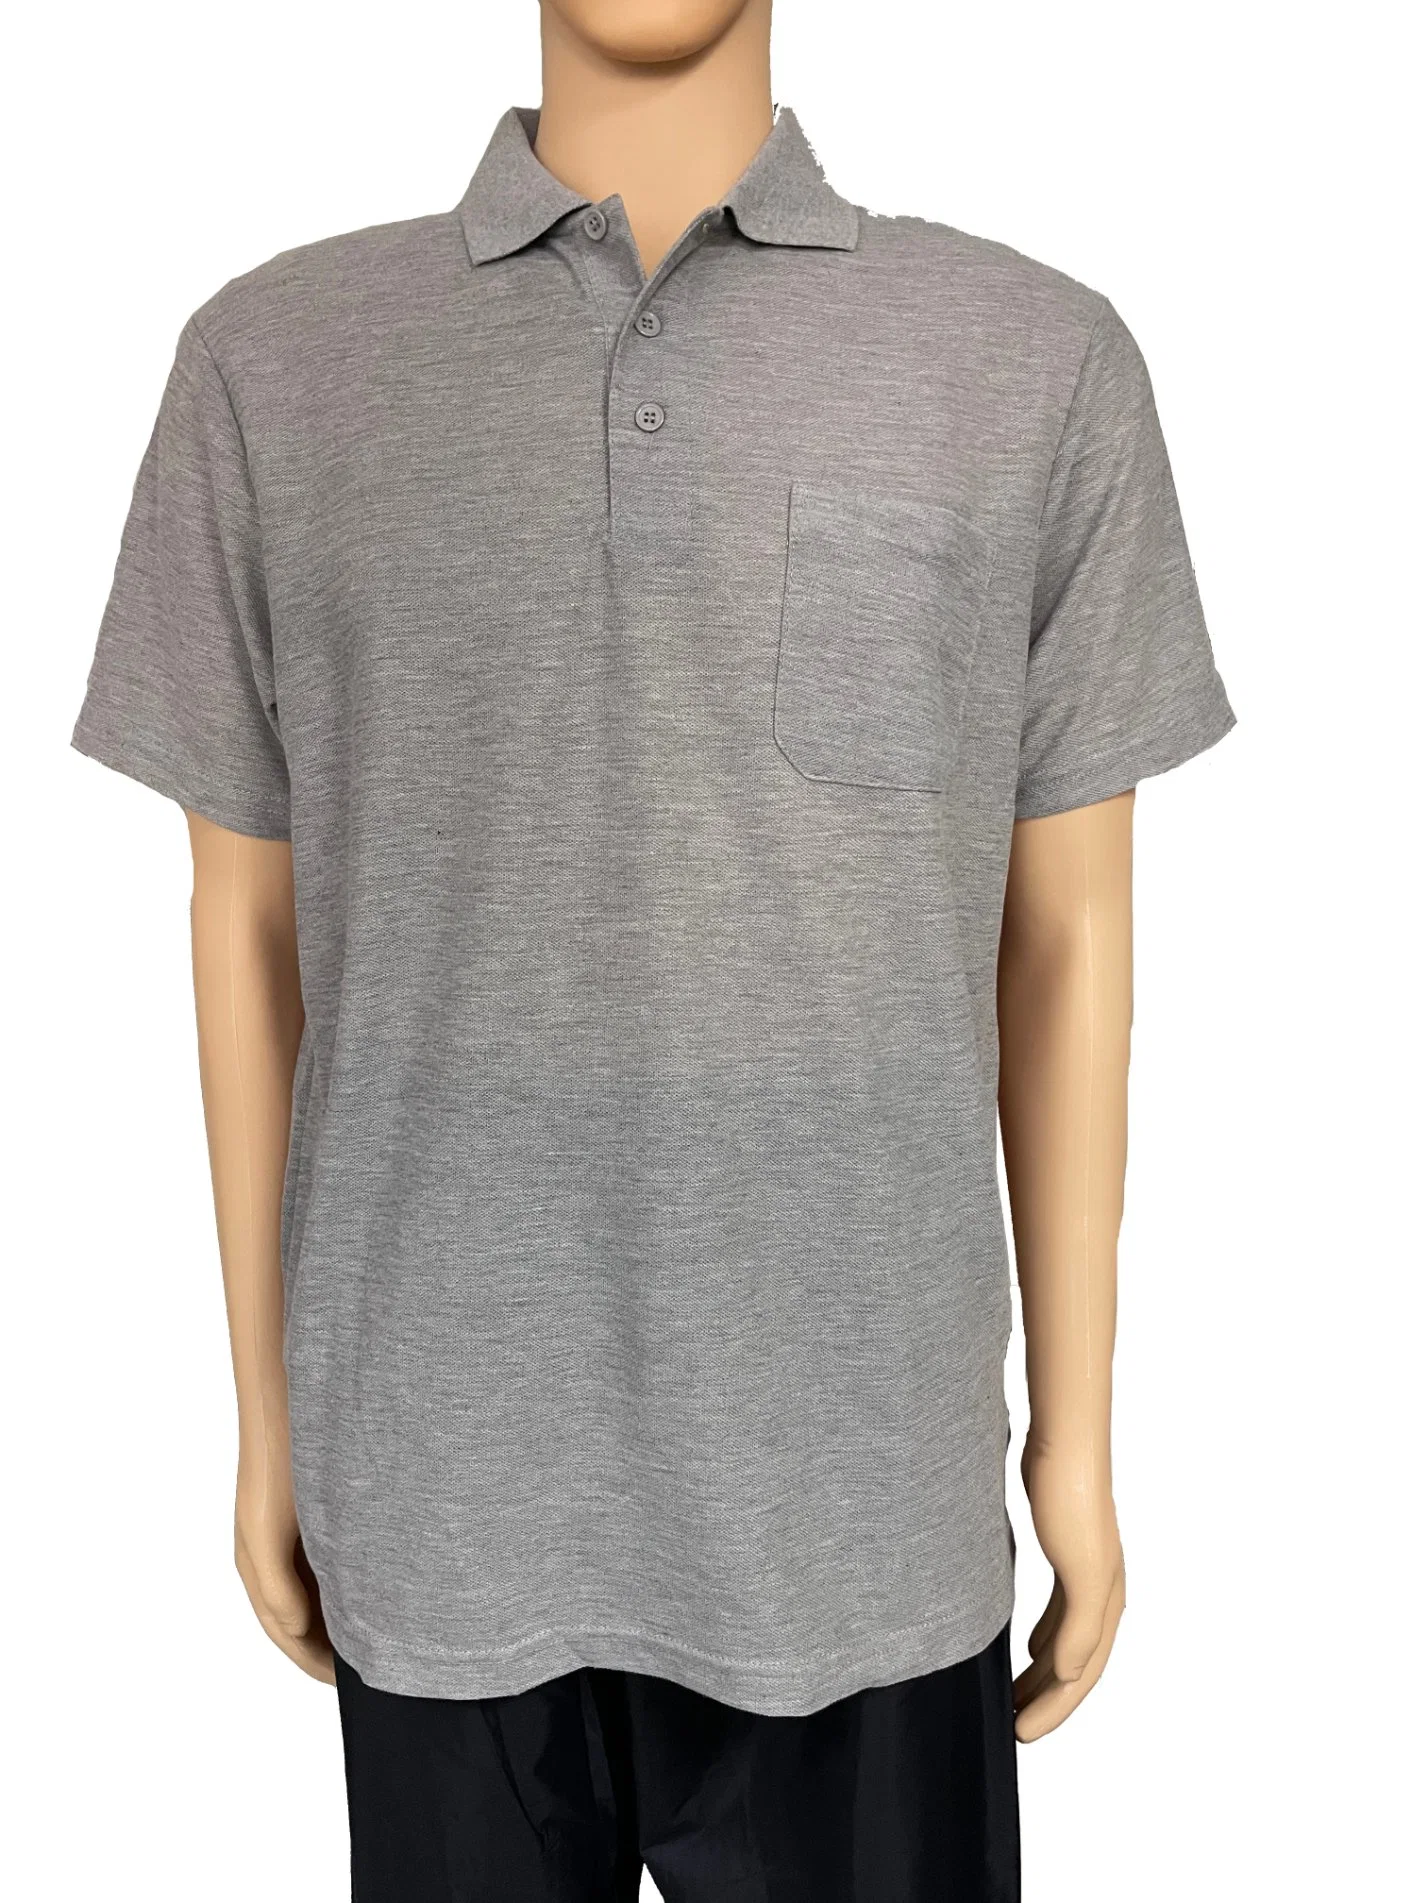 Custom Blank Simple Polo Shirts for Men